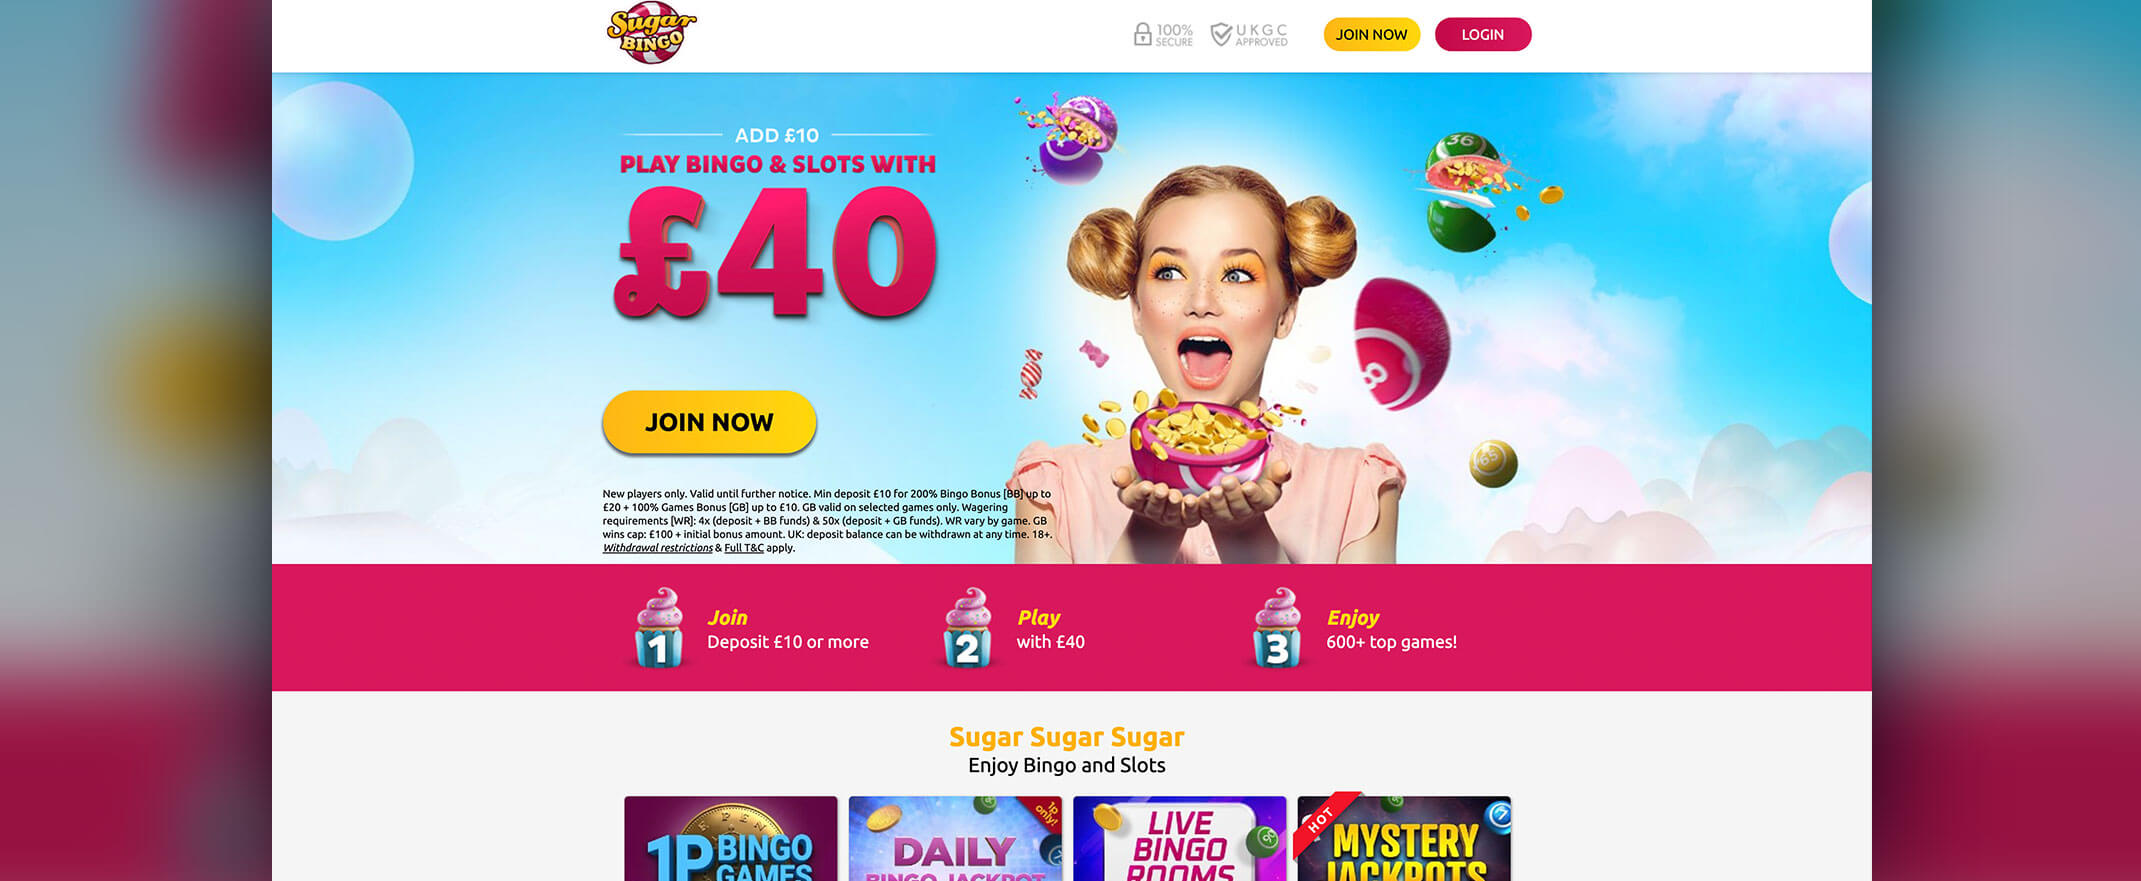 Sugar Bingo Homepage Screenshot #ad